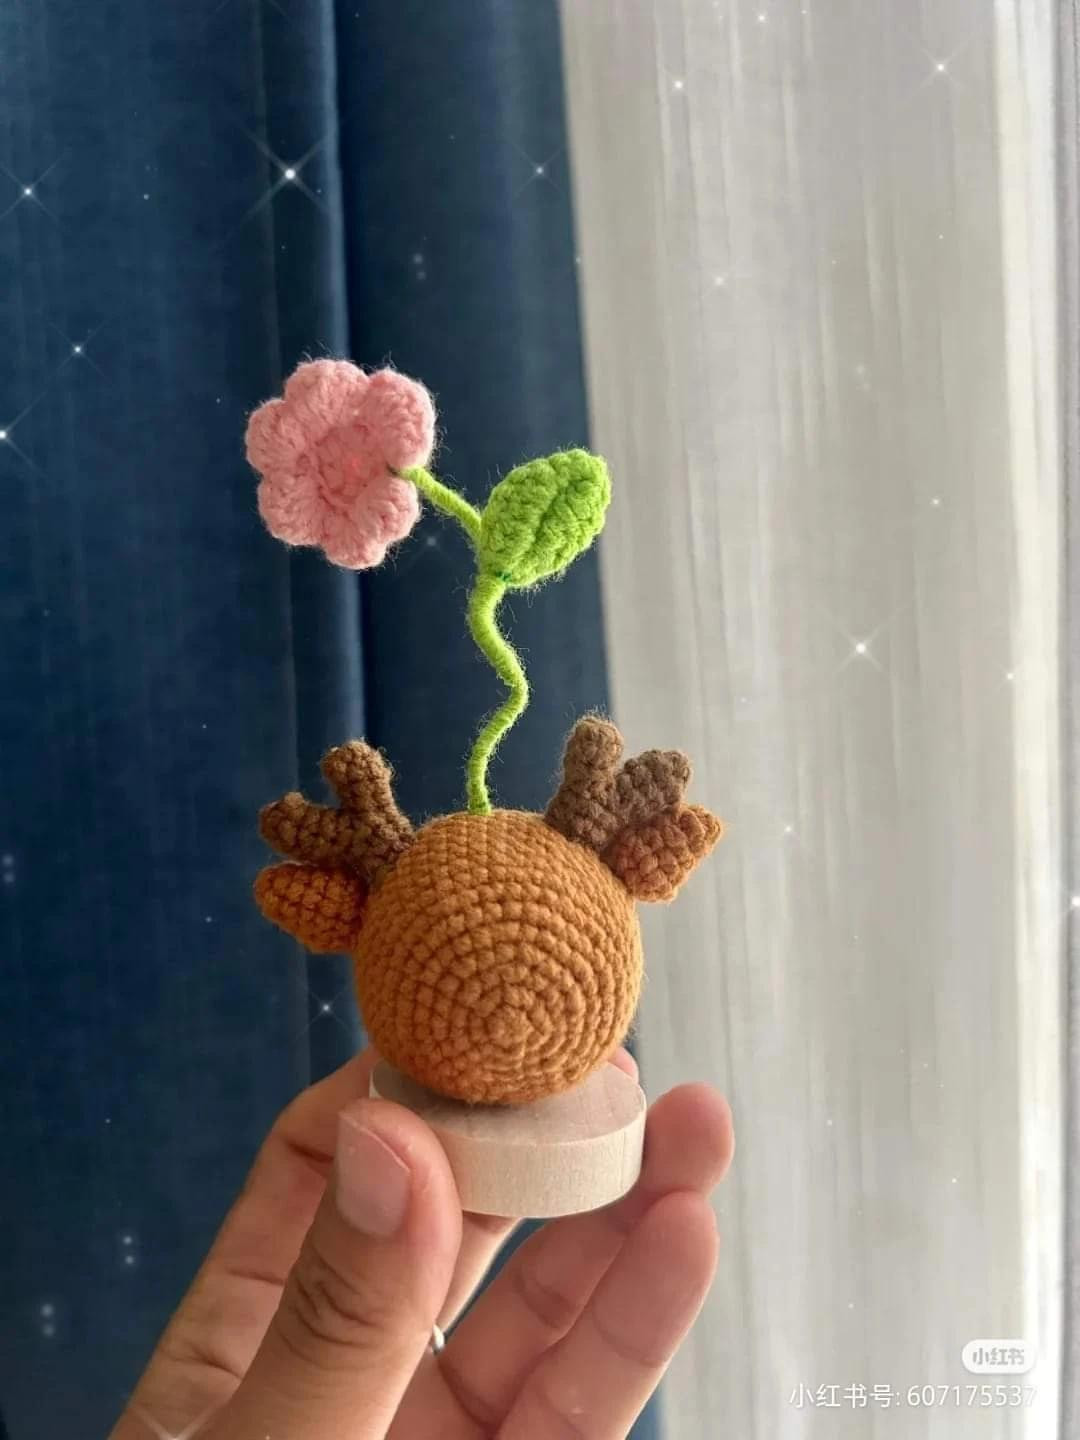 Crochet pattern for deer dumplings and flowers